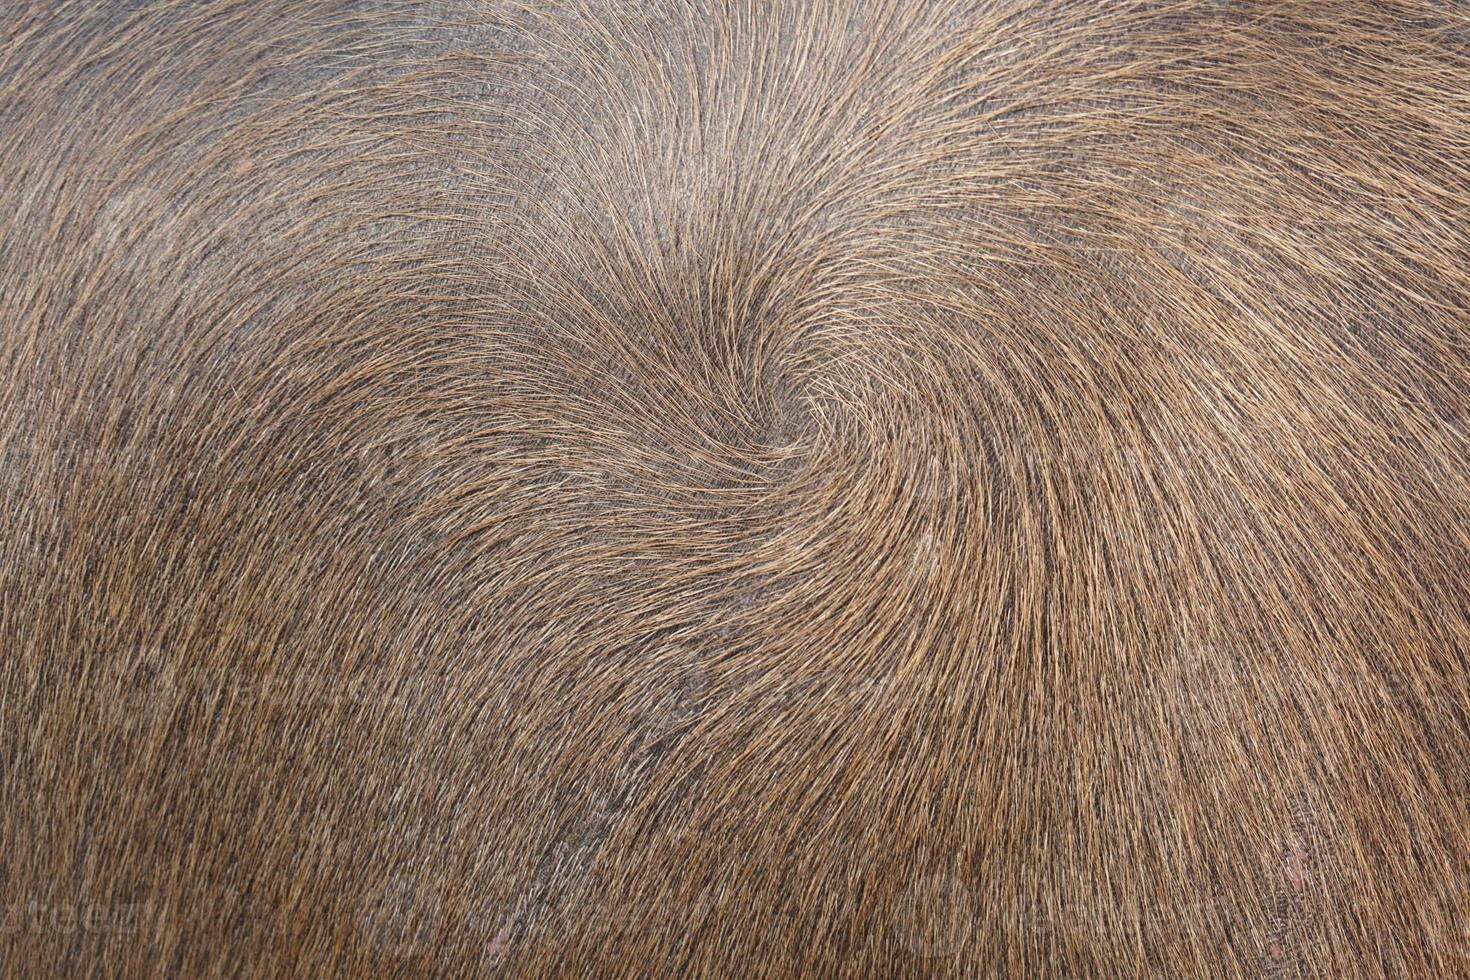 buffalo hair background in thailand photo